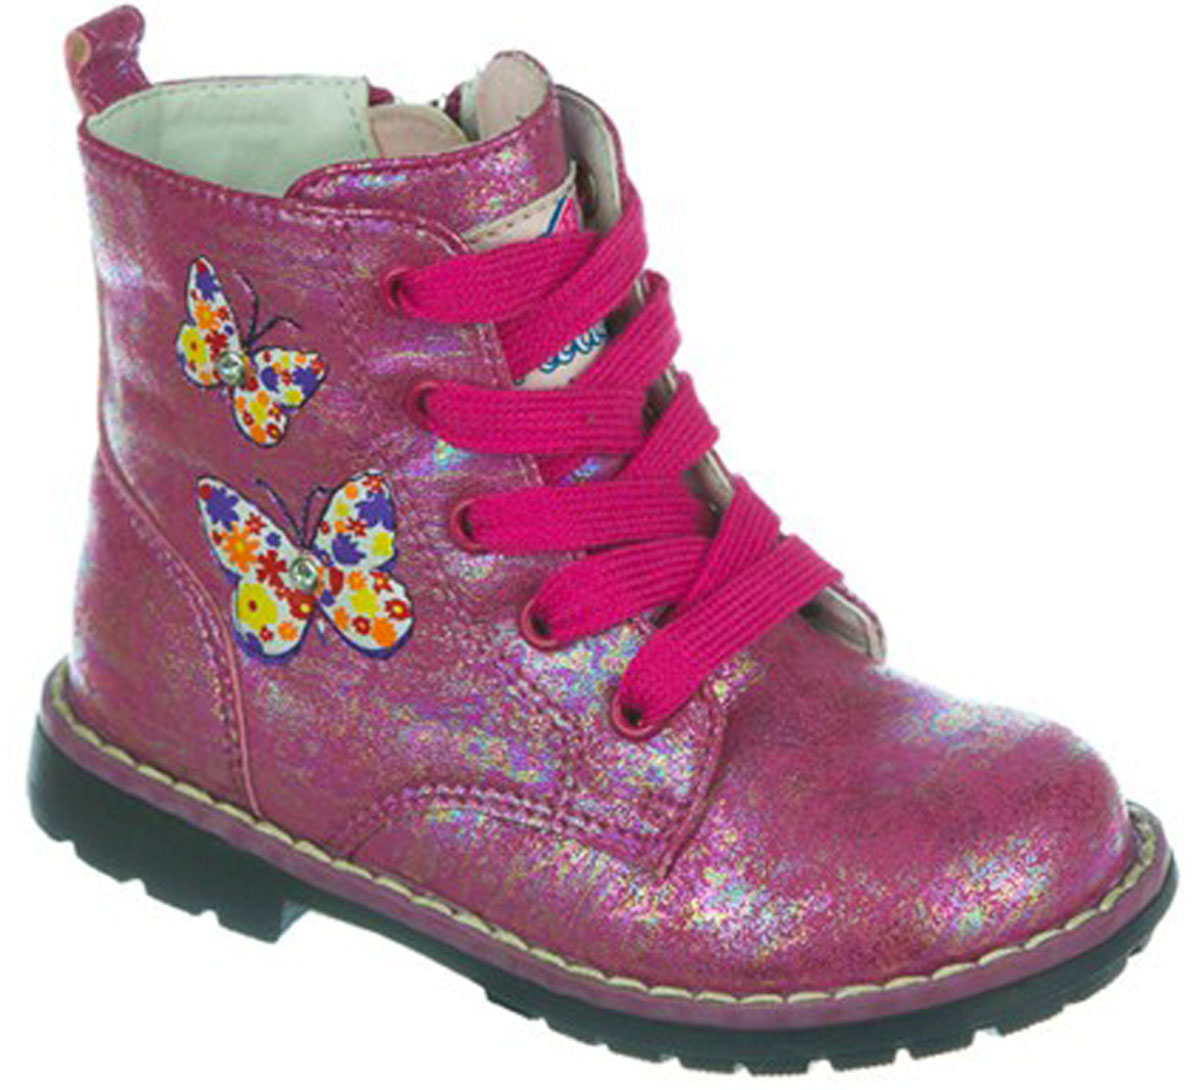 Ботинки для девочки Indigo Kids, цвет: фуксия. 51-293A/12. Размер 27